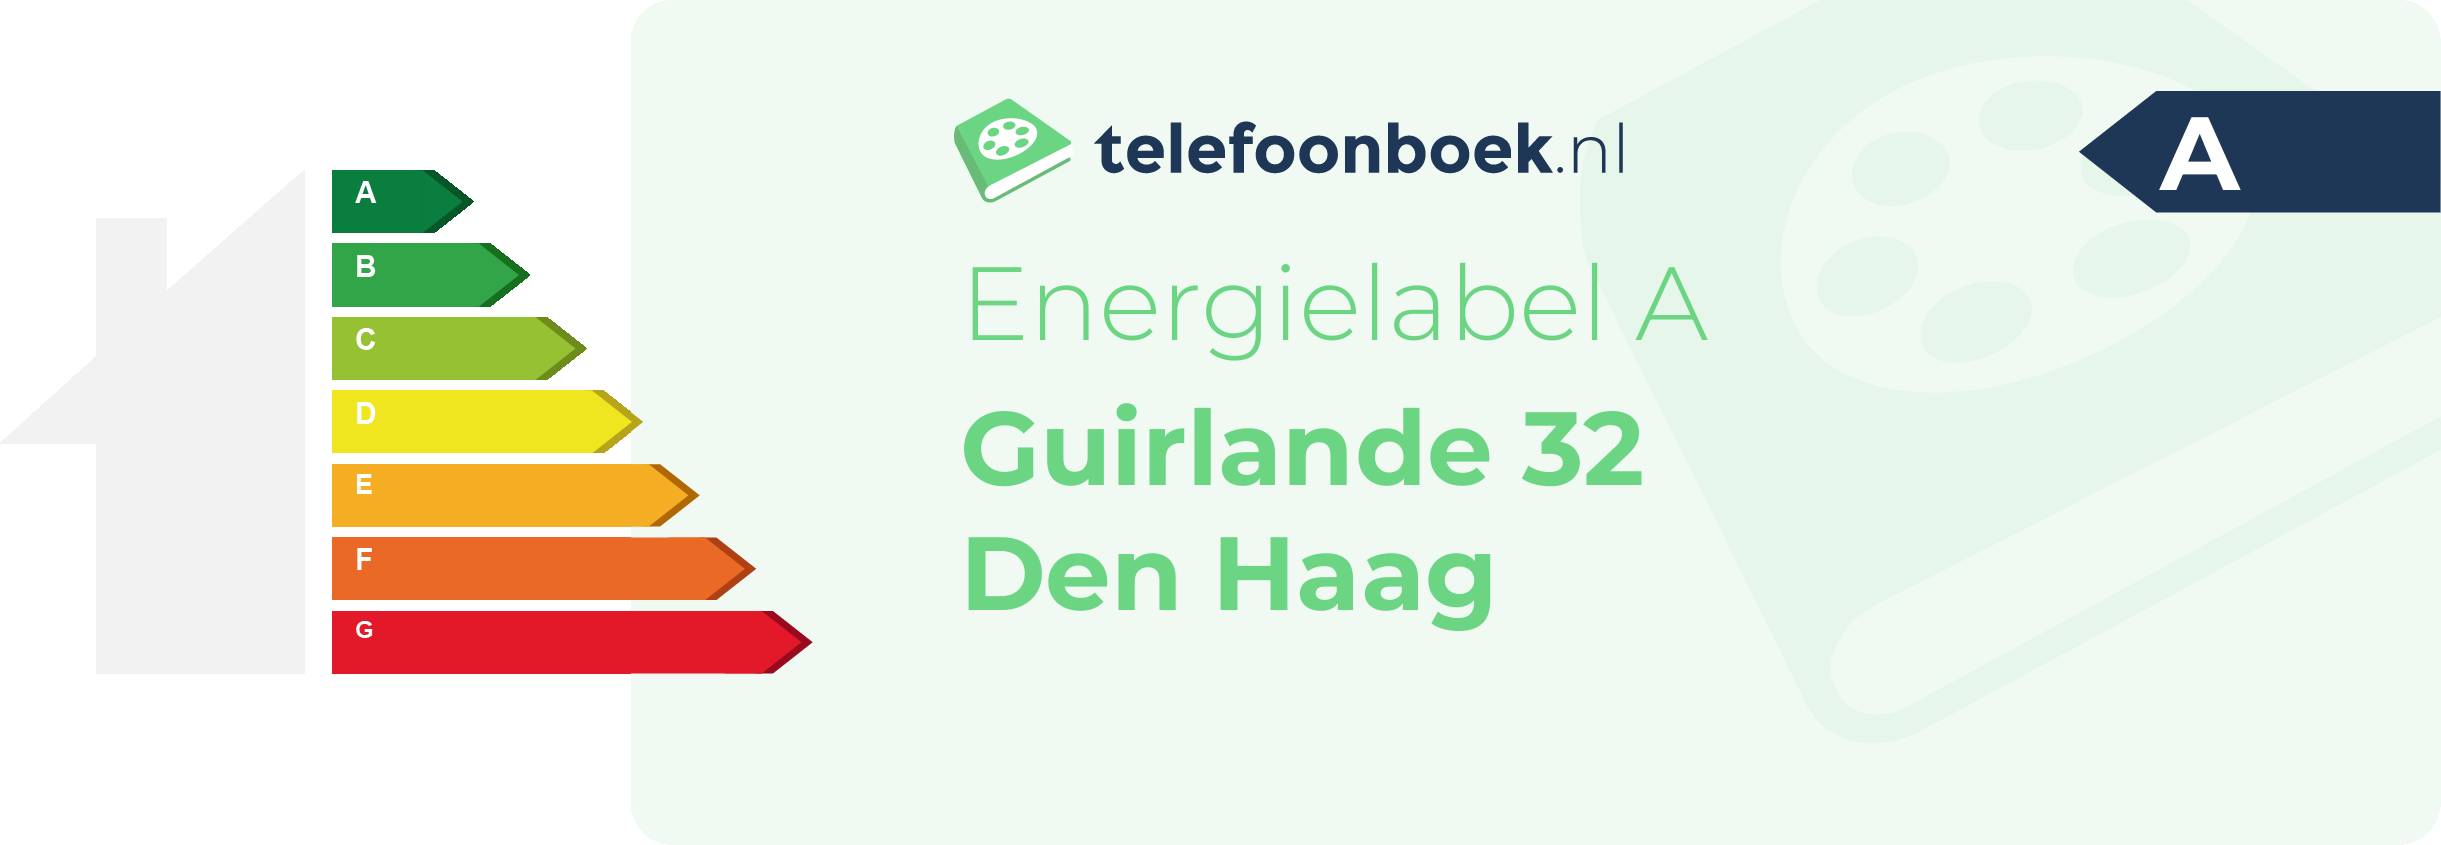 Energielabel Guirlande 32 Den Haag